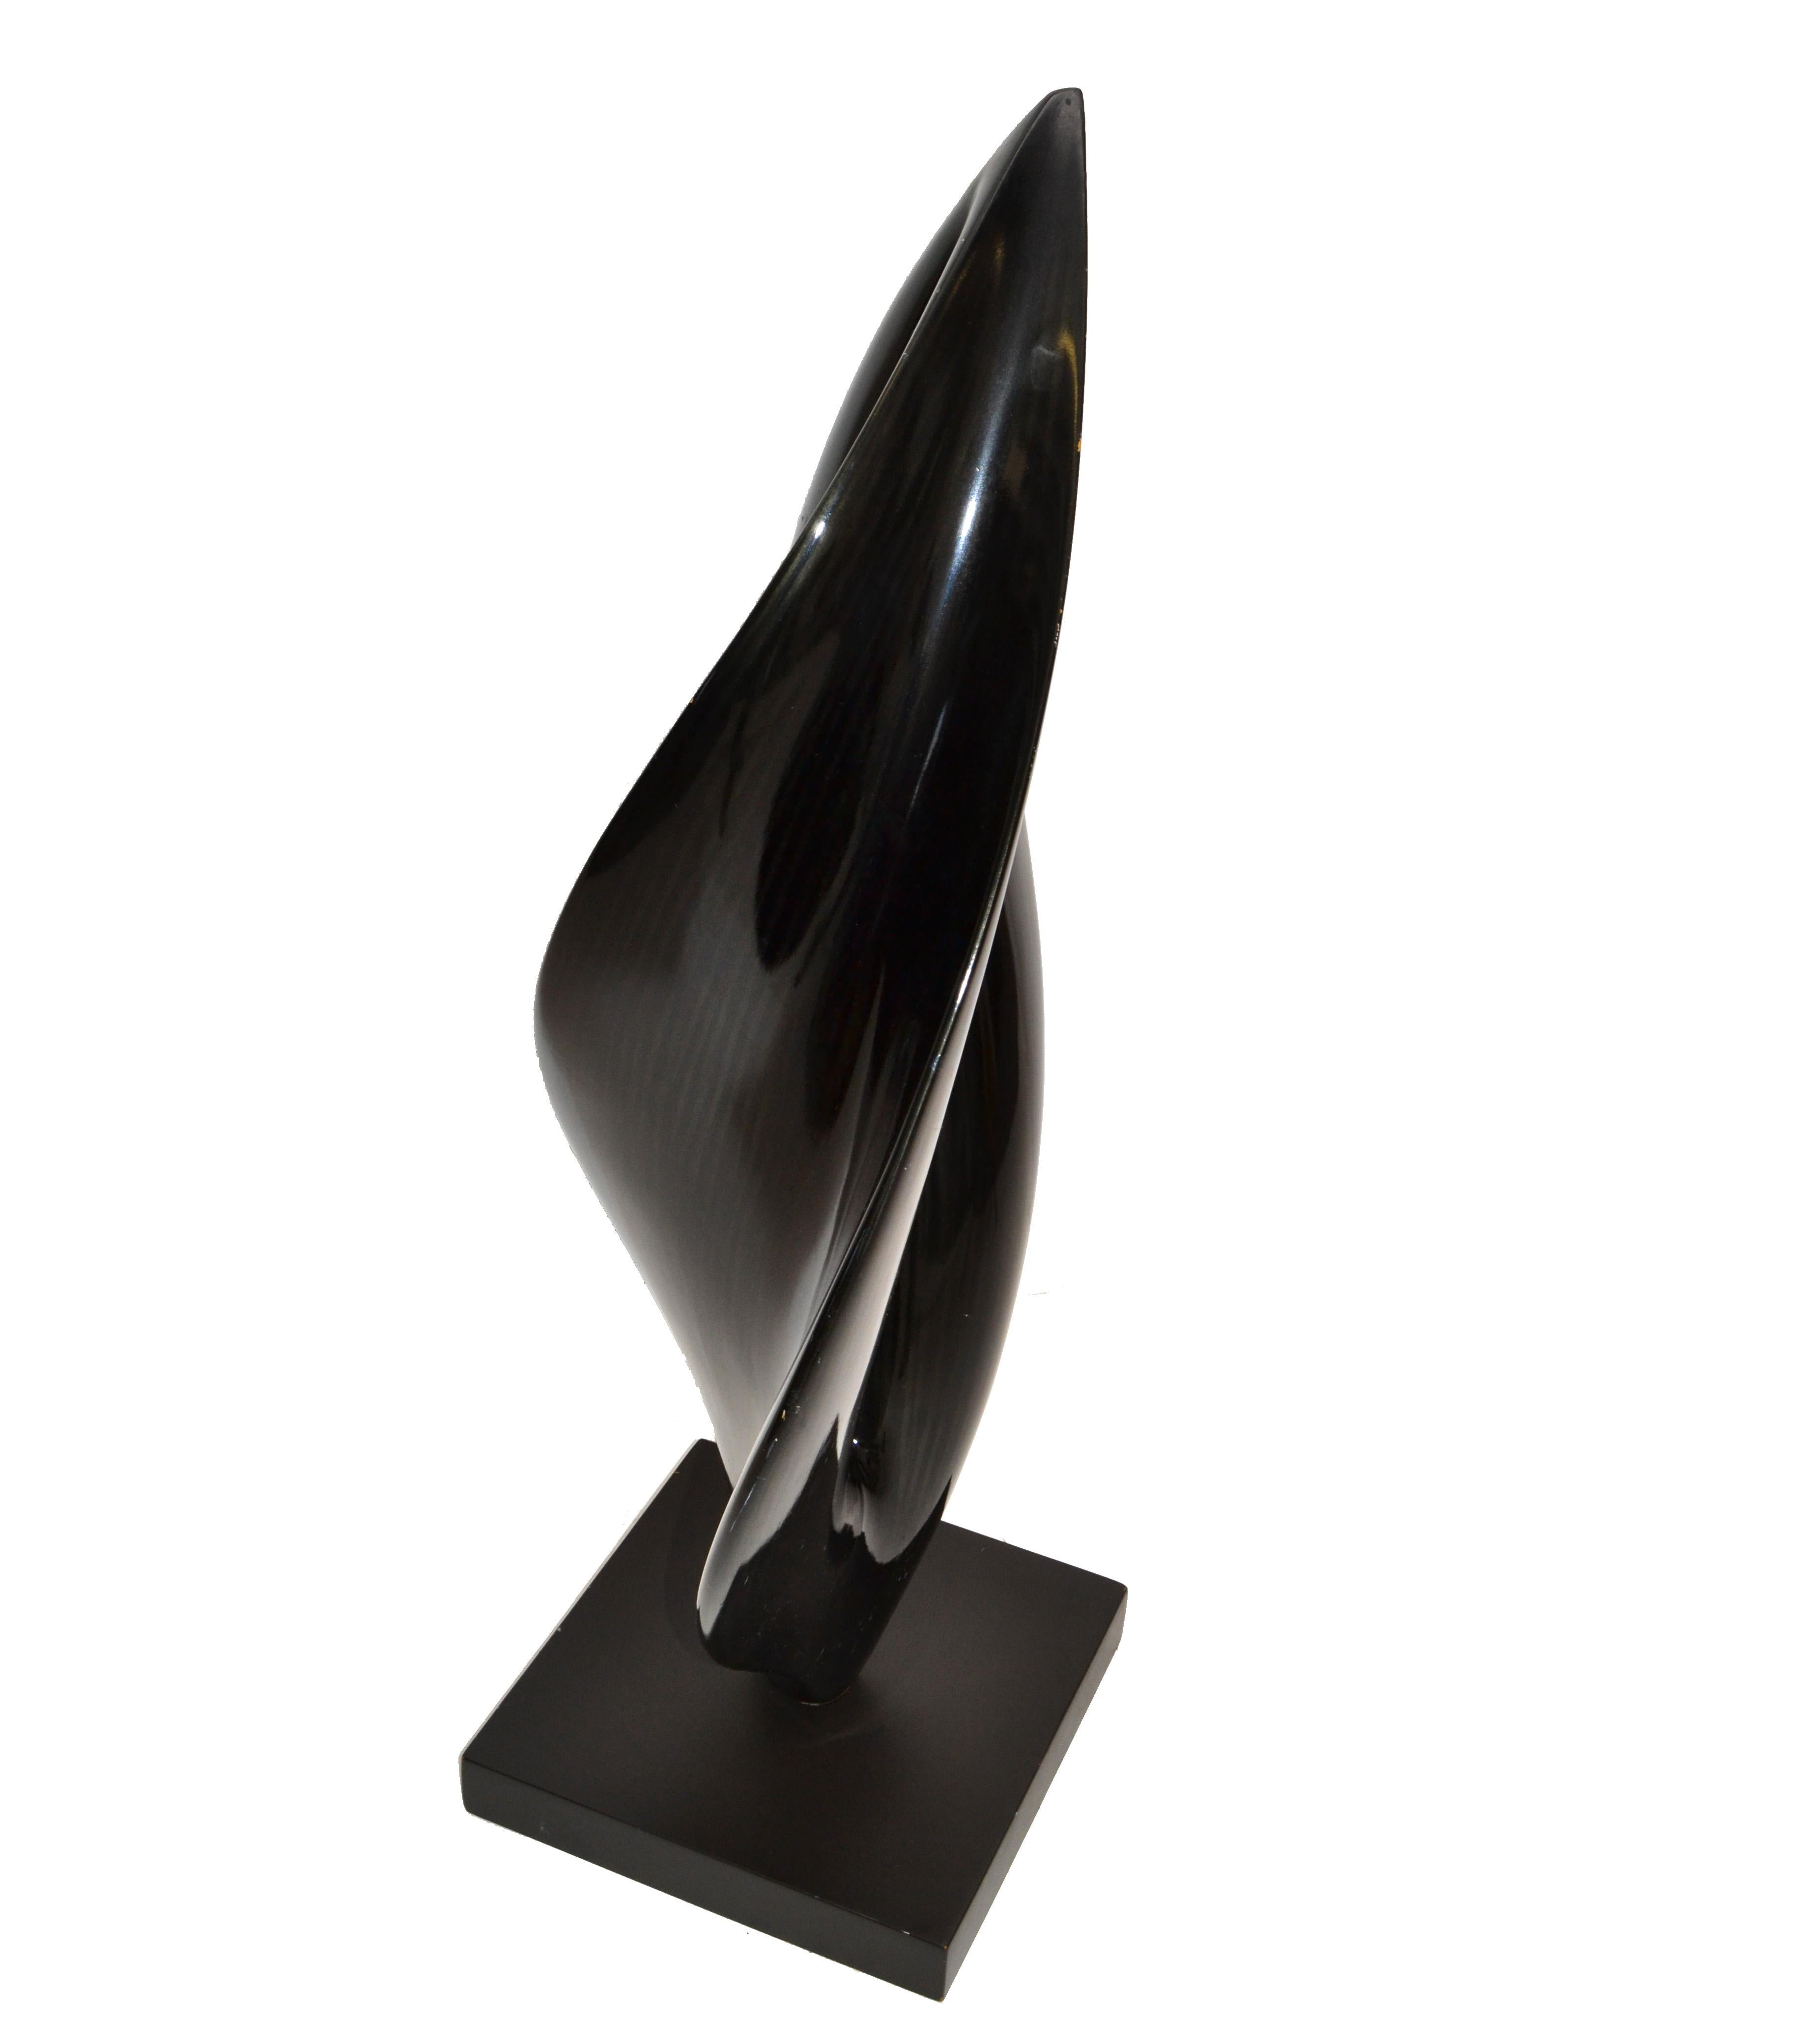 Black Lacquer Sculptural Wood Mid-Century Modern Fine Art Sculpture Square Base For Sale 1